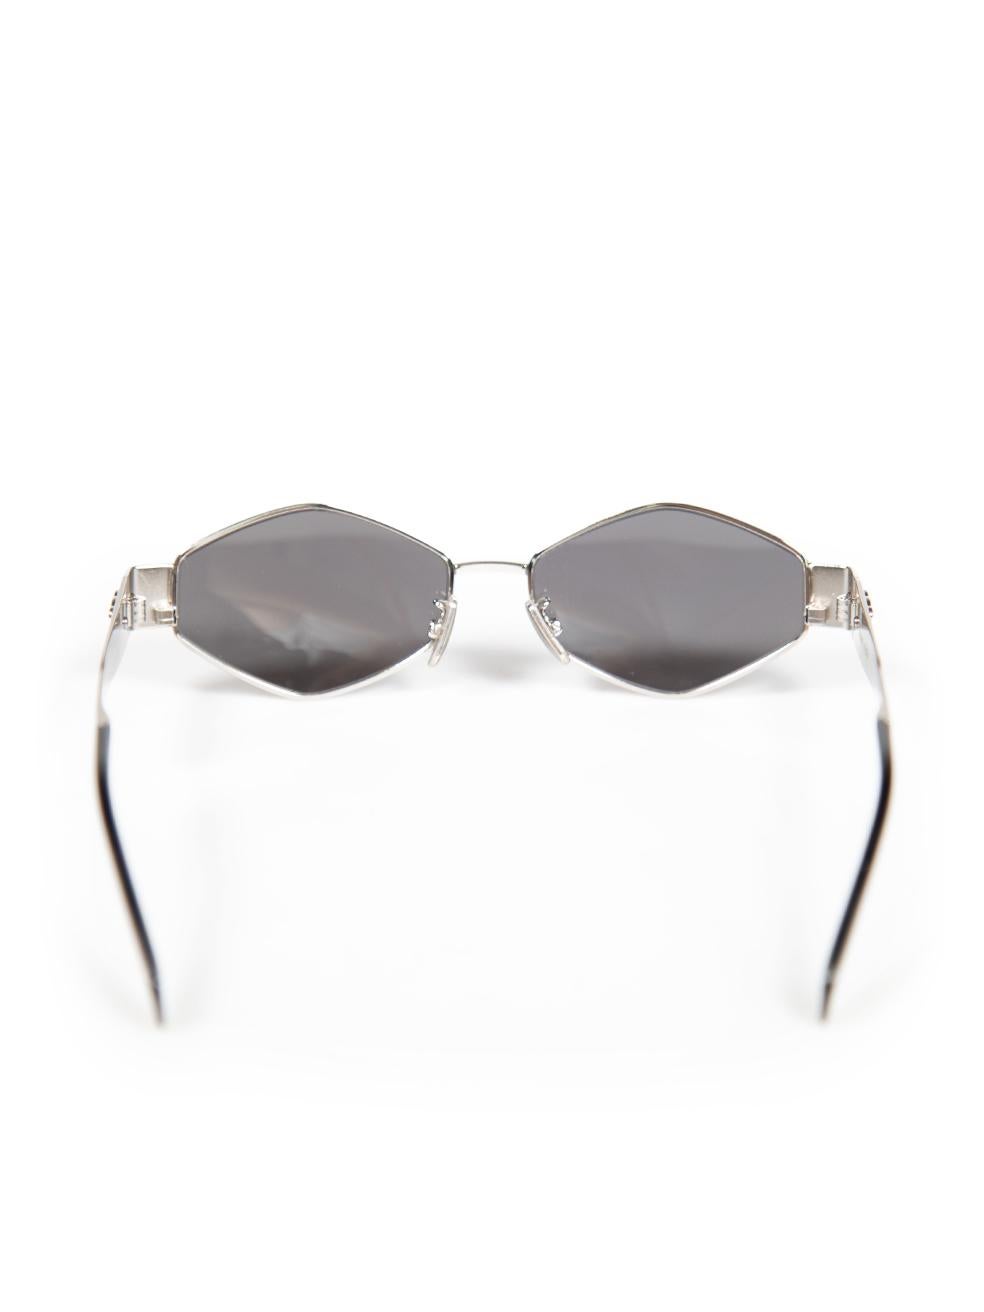 Céline Silver Triomphe Geometric Sunglasses In New Condition For Sale In London, GB